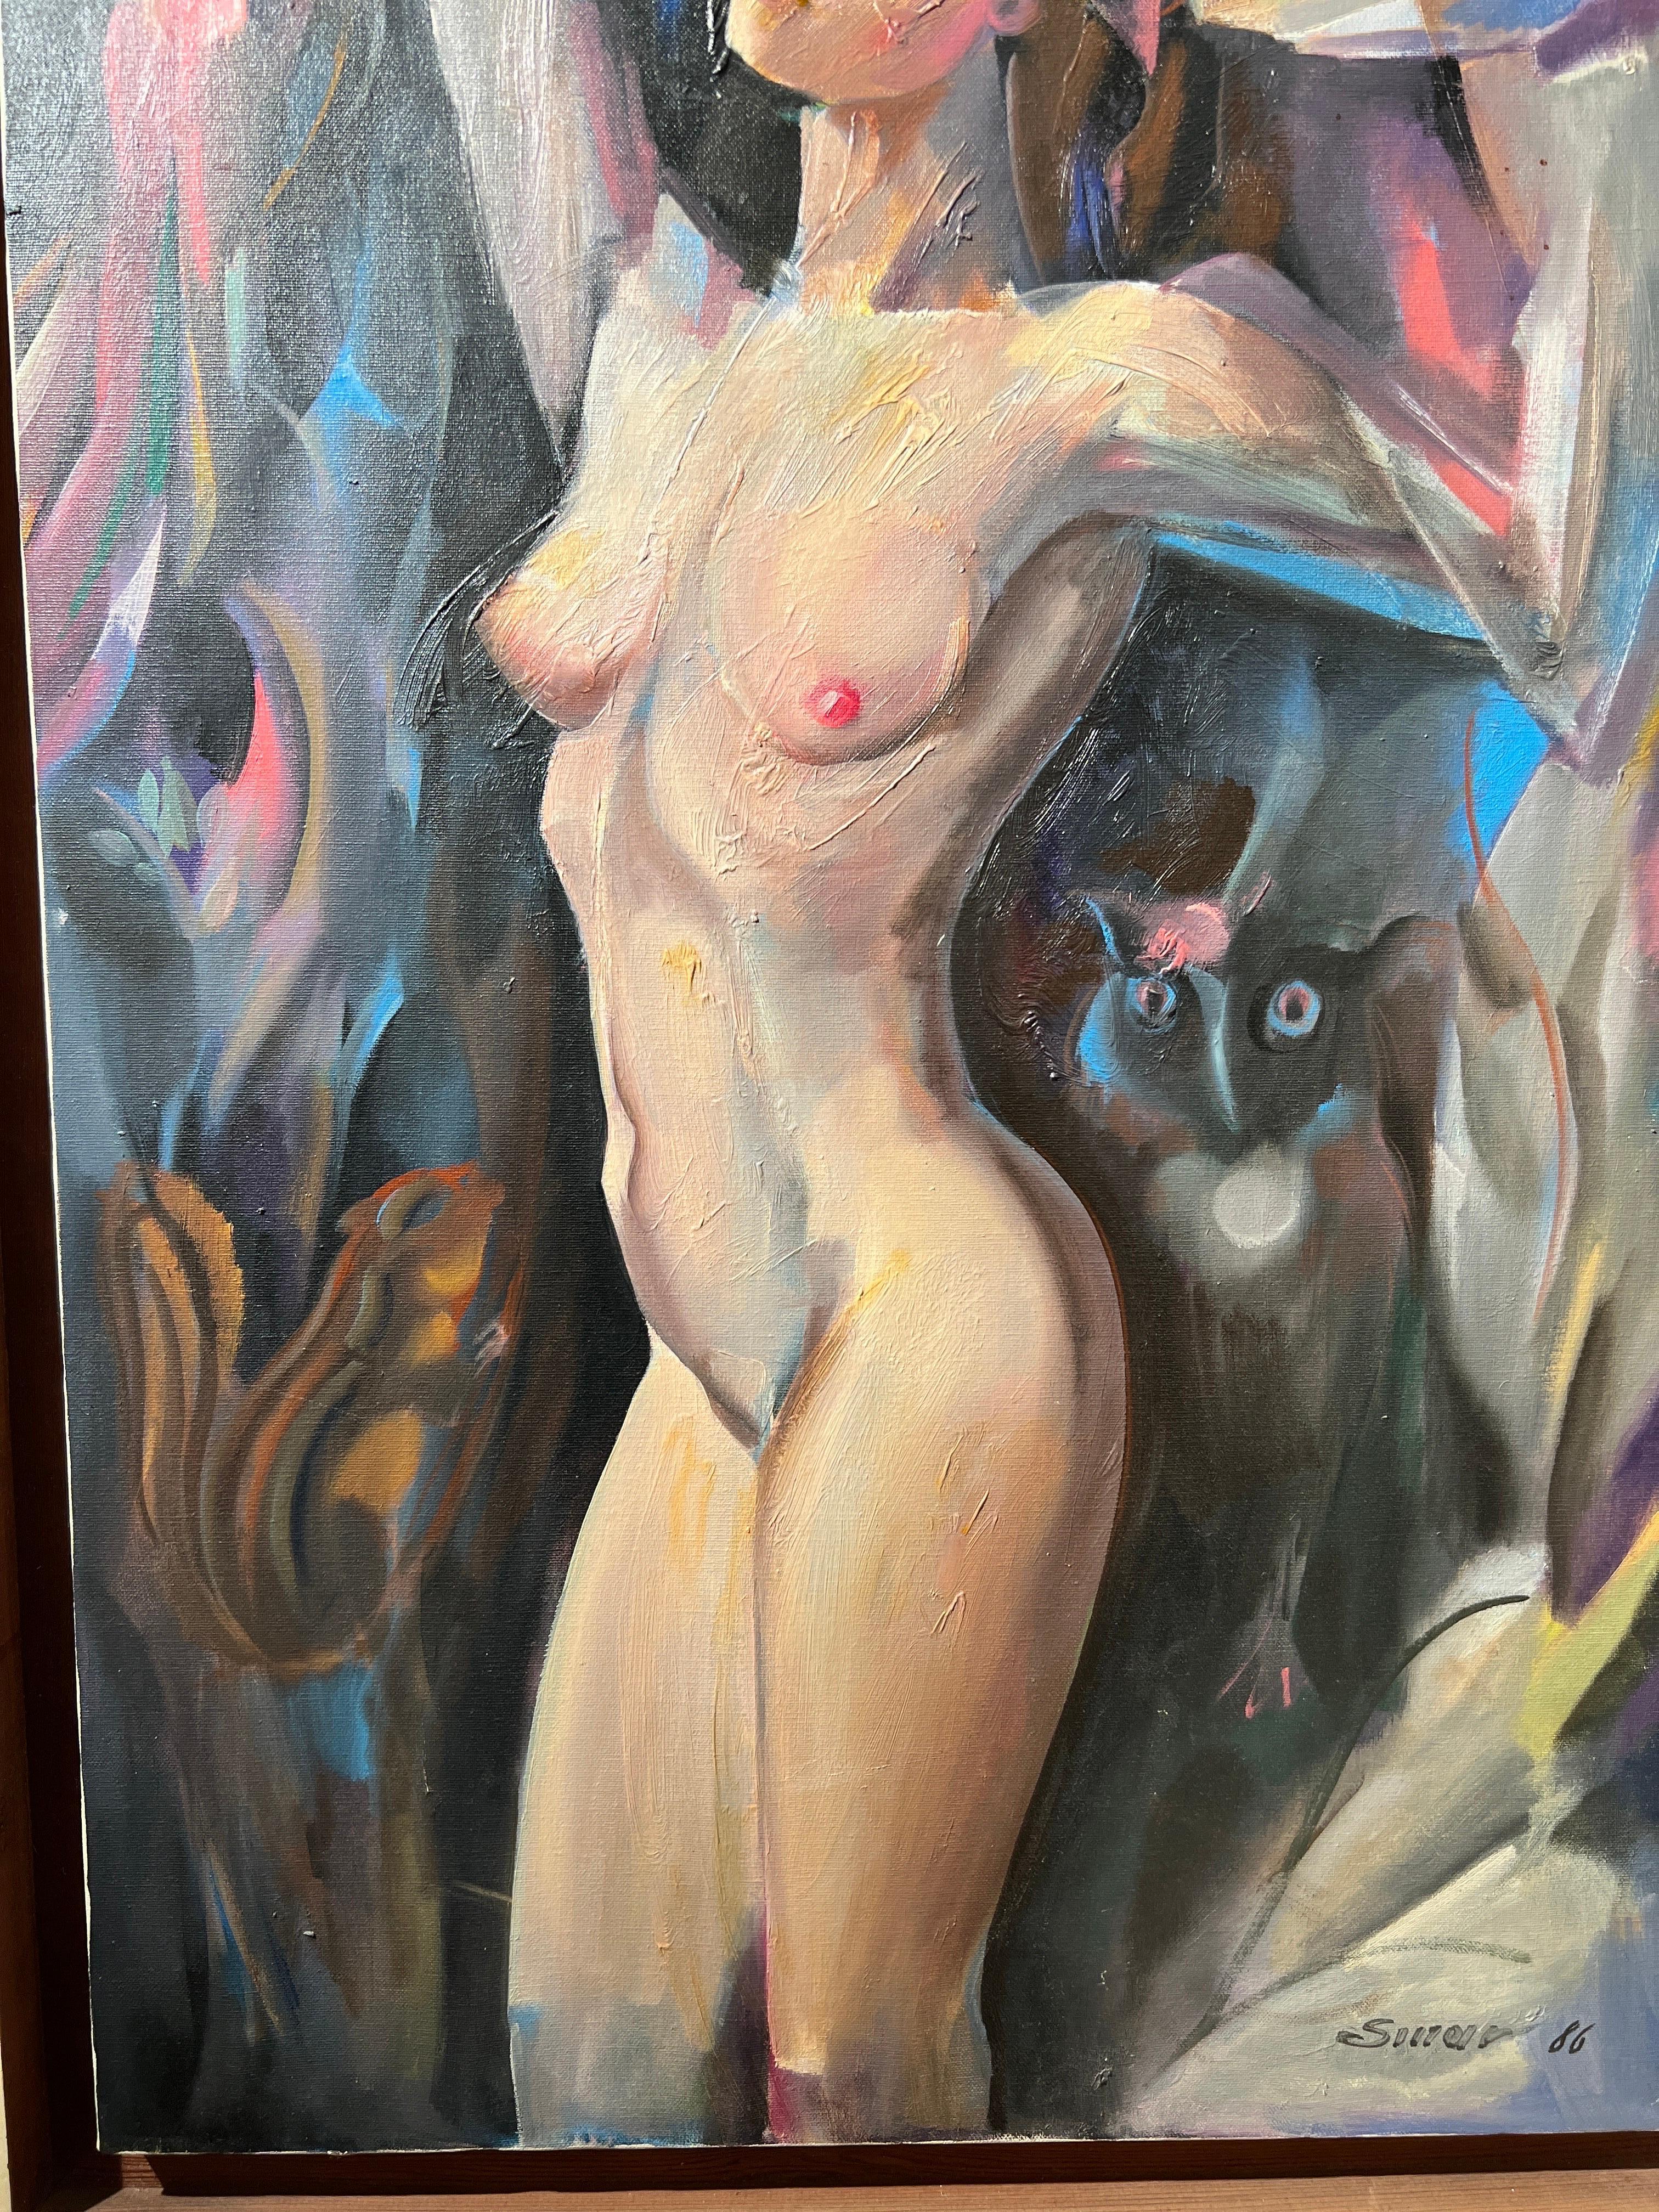 36x24 oil on canvas 
39x27 with framed